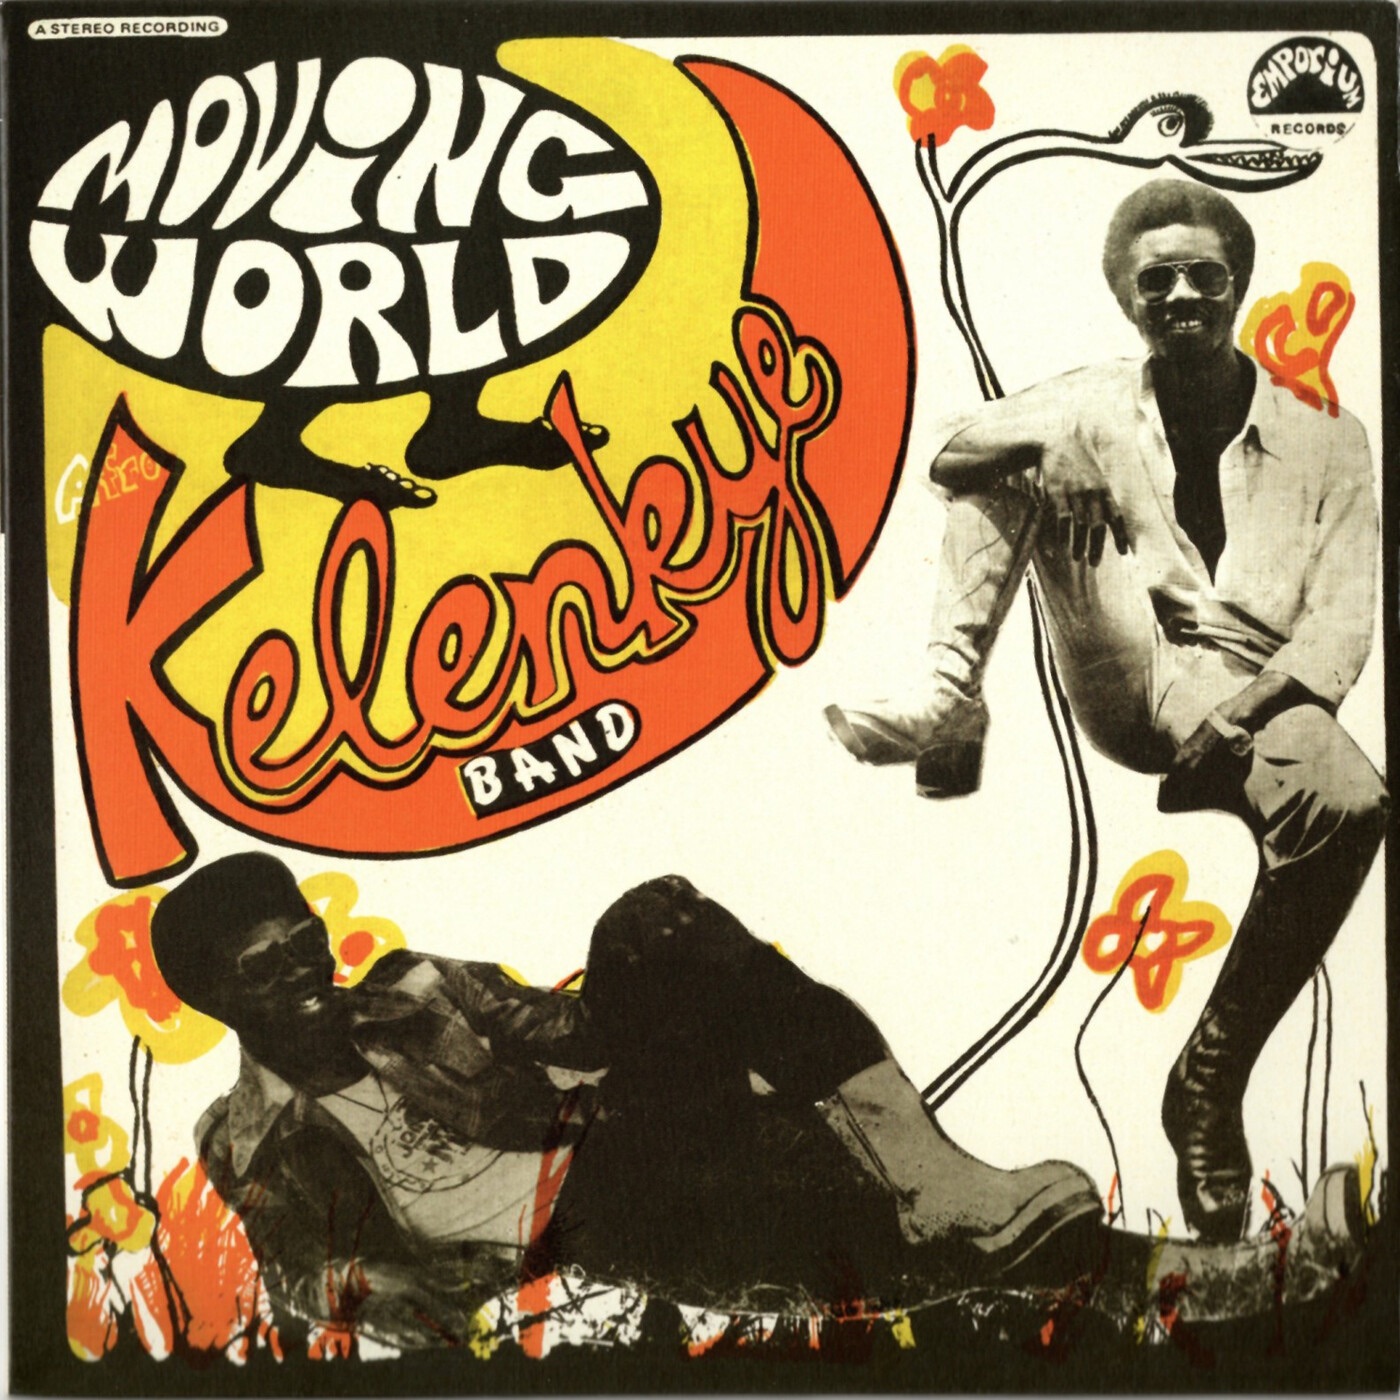 Moving World by Kelenkye Band